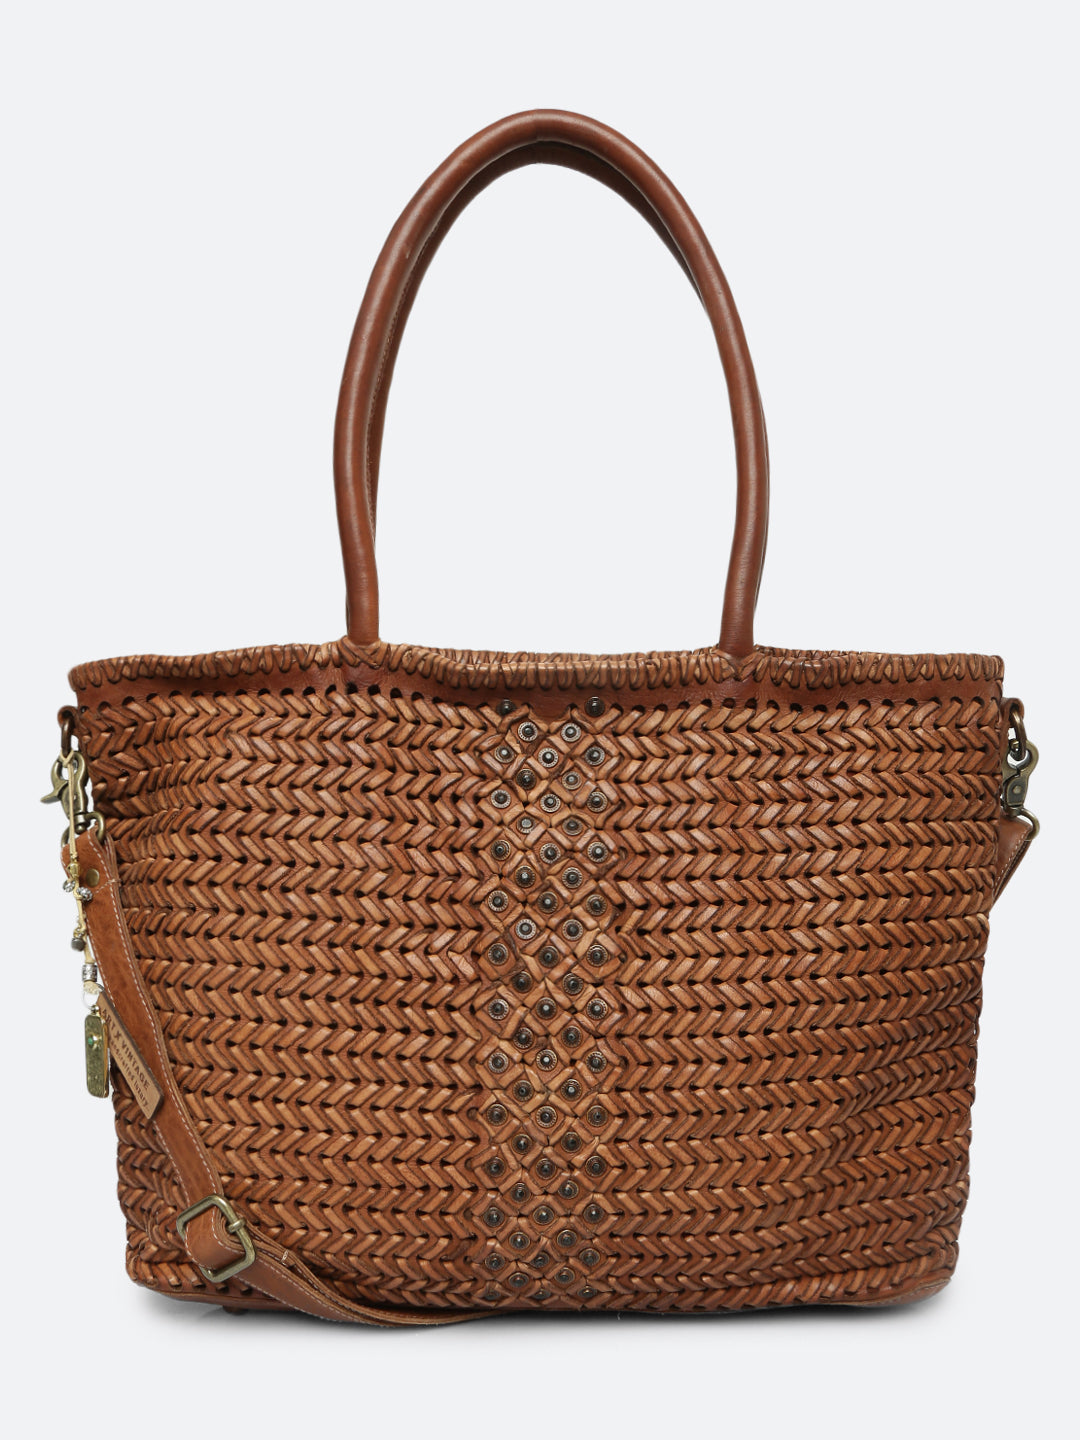 Genuine Cognac Leather Hand Weaving Tote Bag